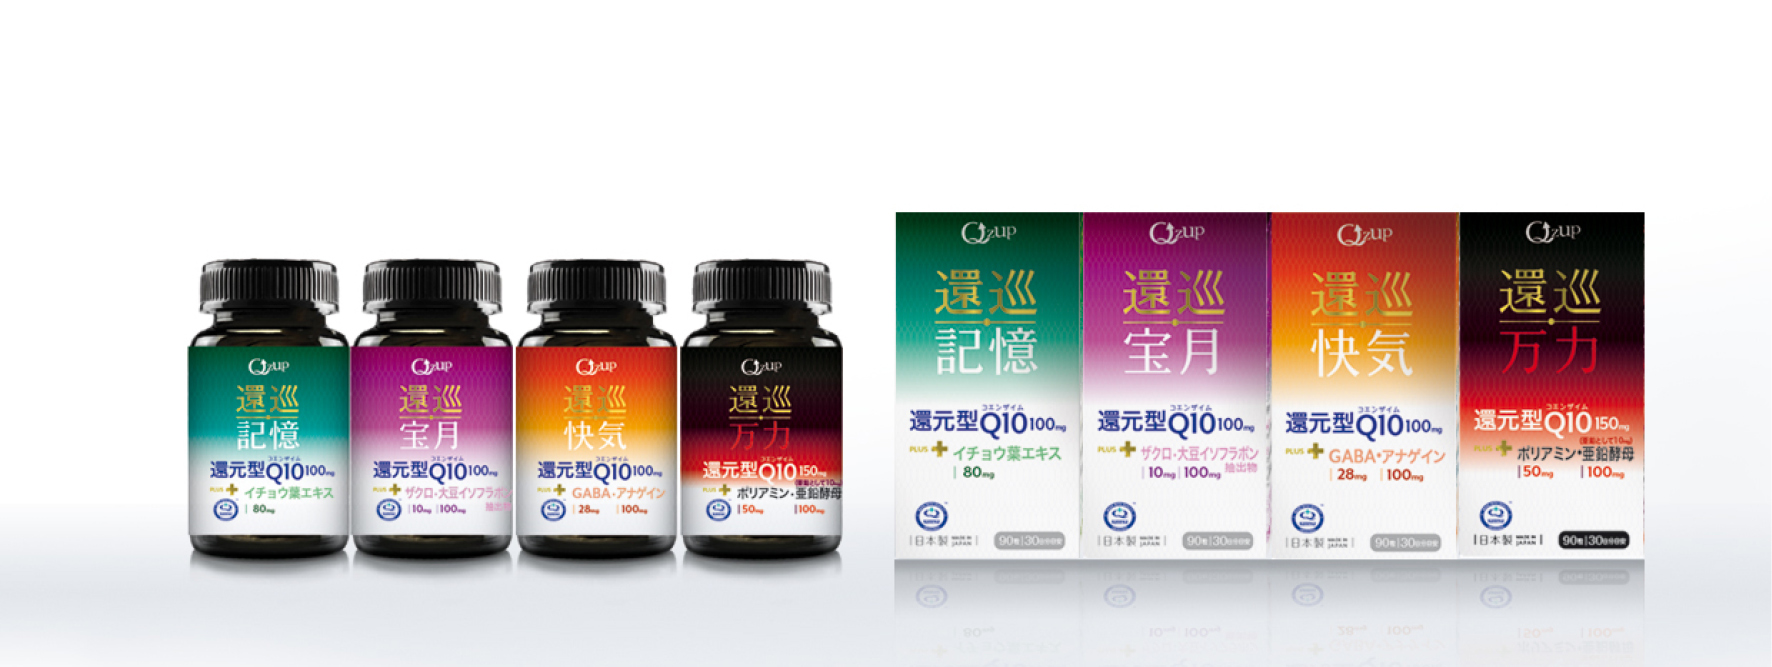 Pharmaceutique / Kaneka corporation, packaging pharmacie